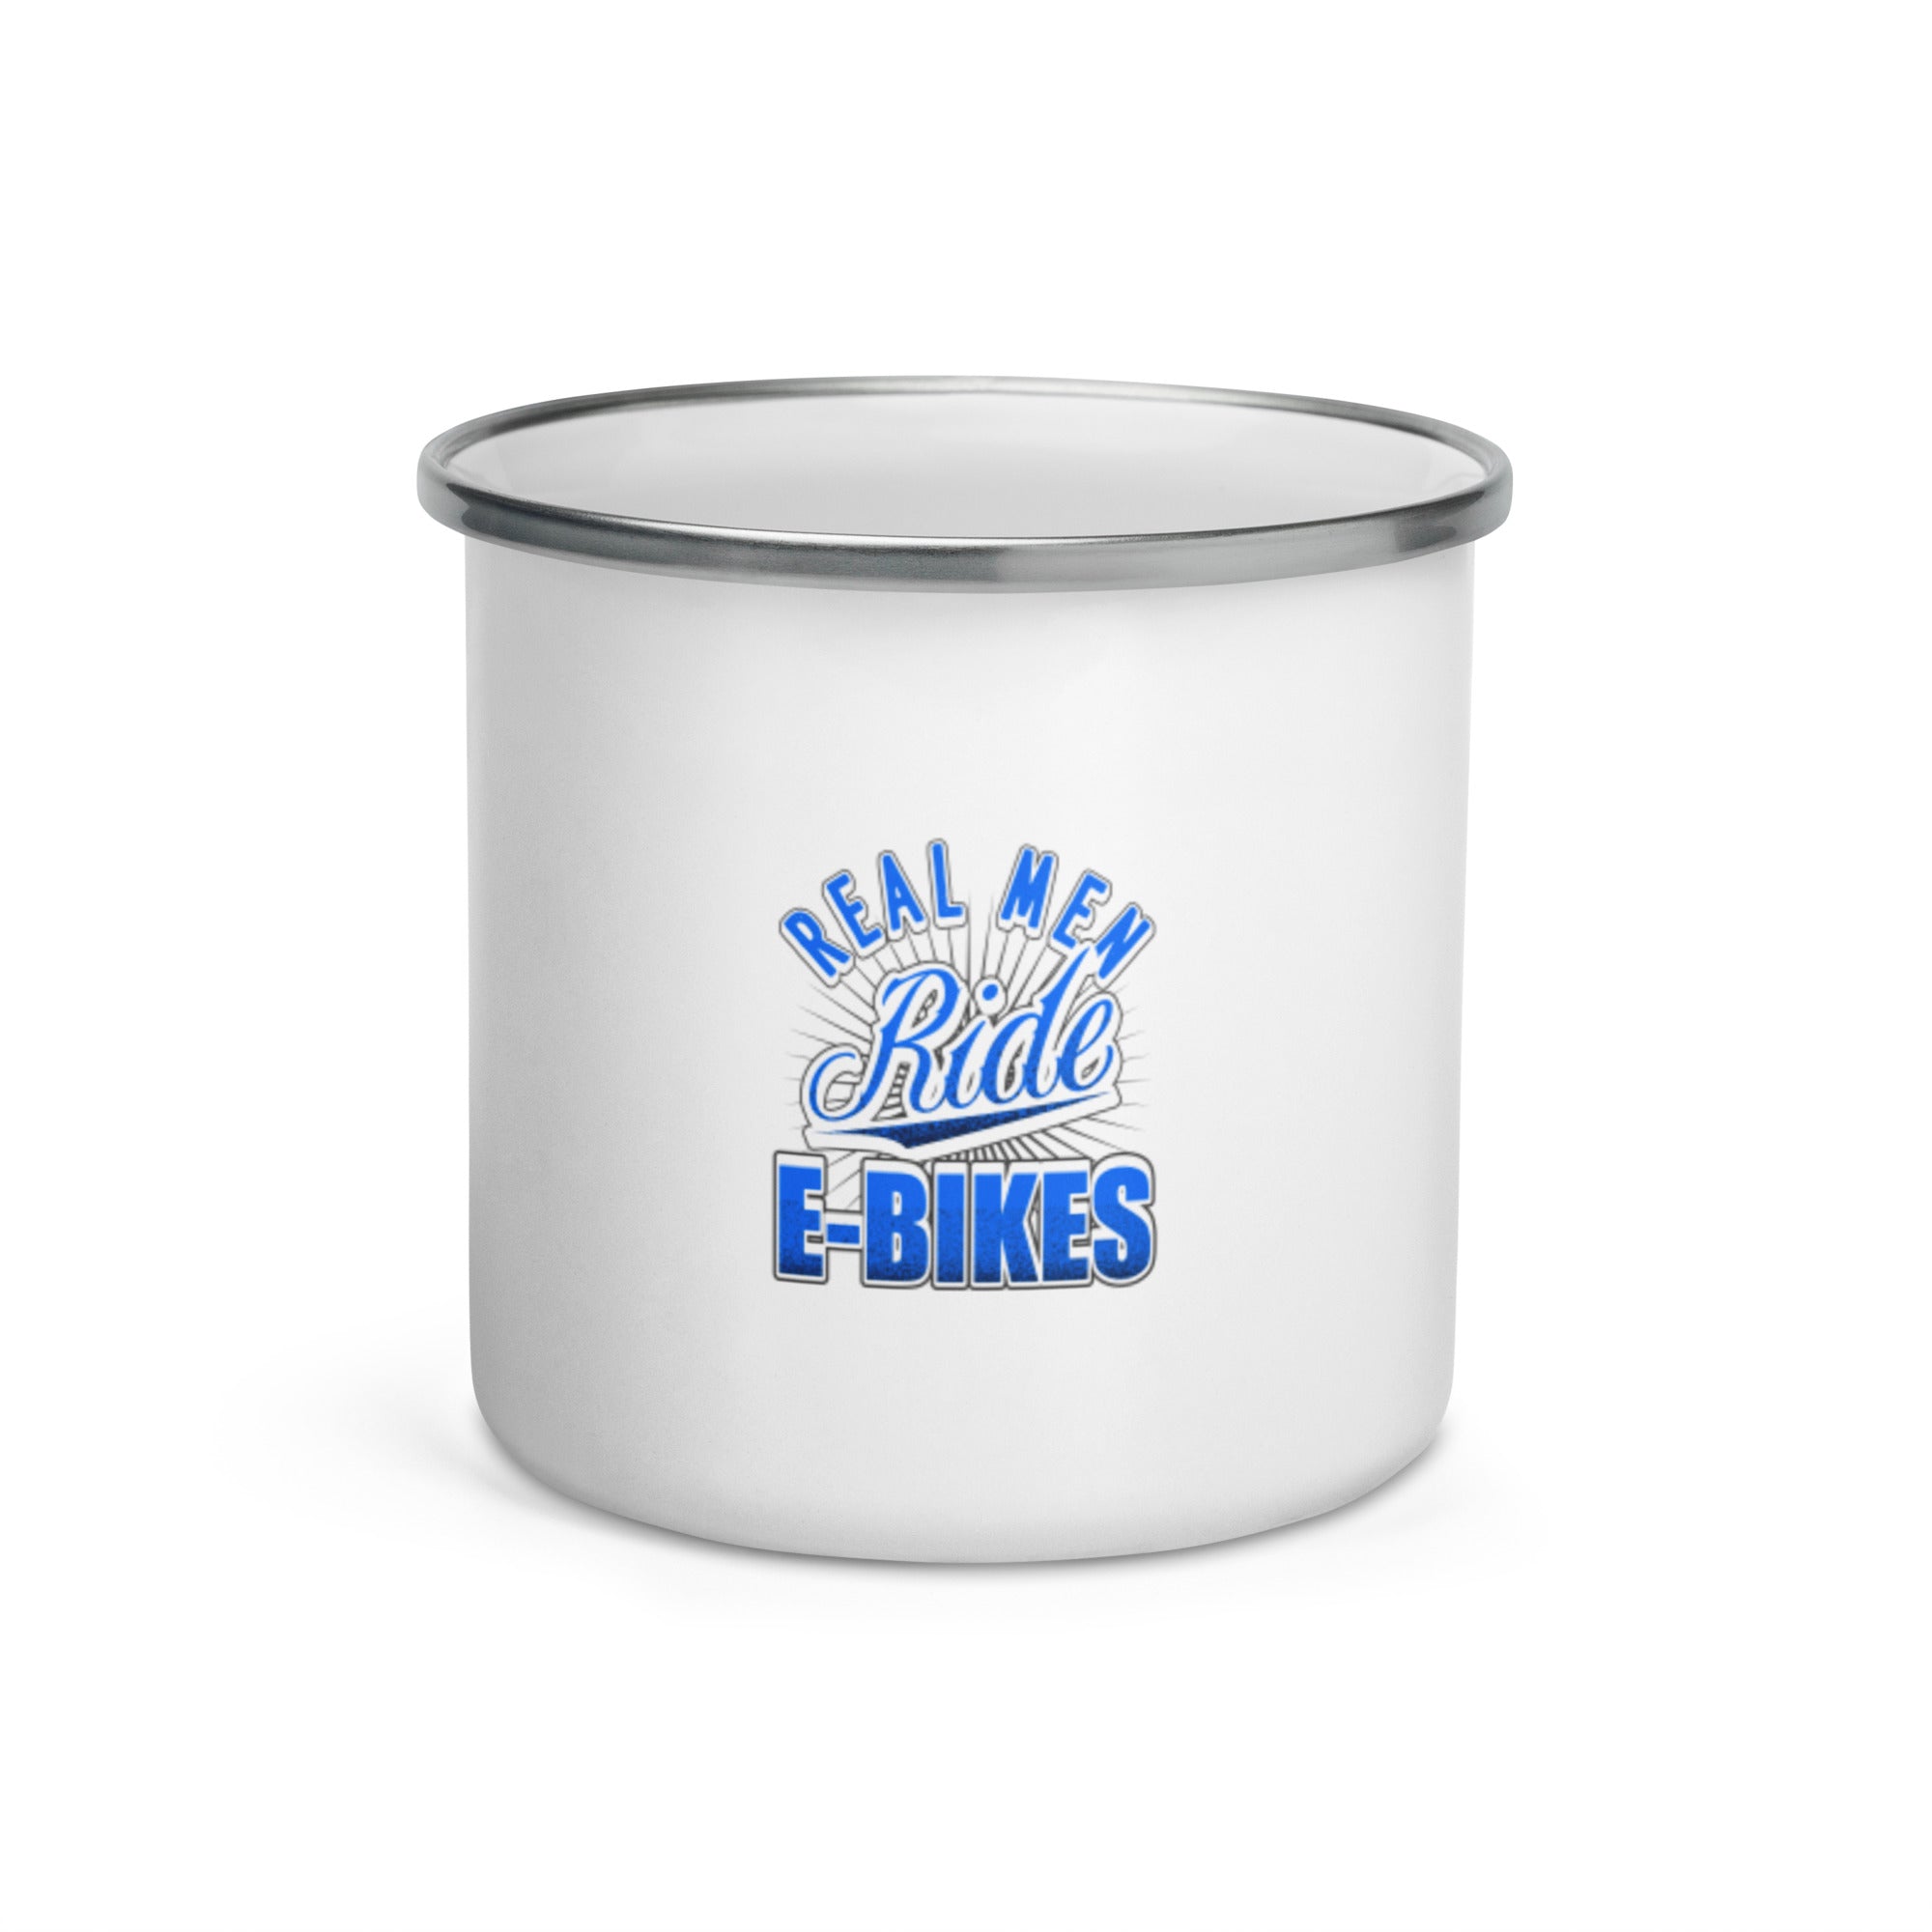 Real Men Ride E-bikes Enamel Coffee Mug